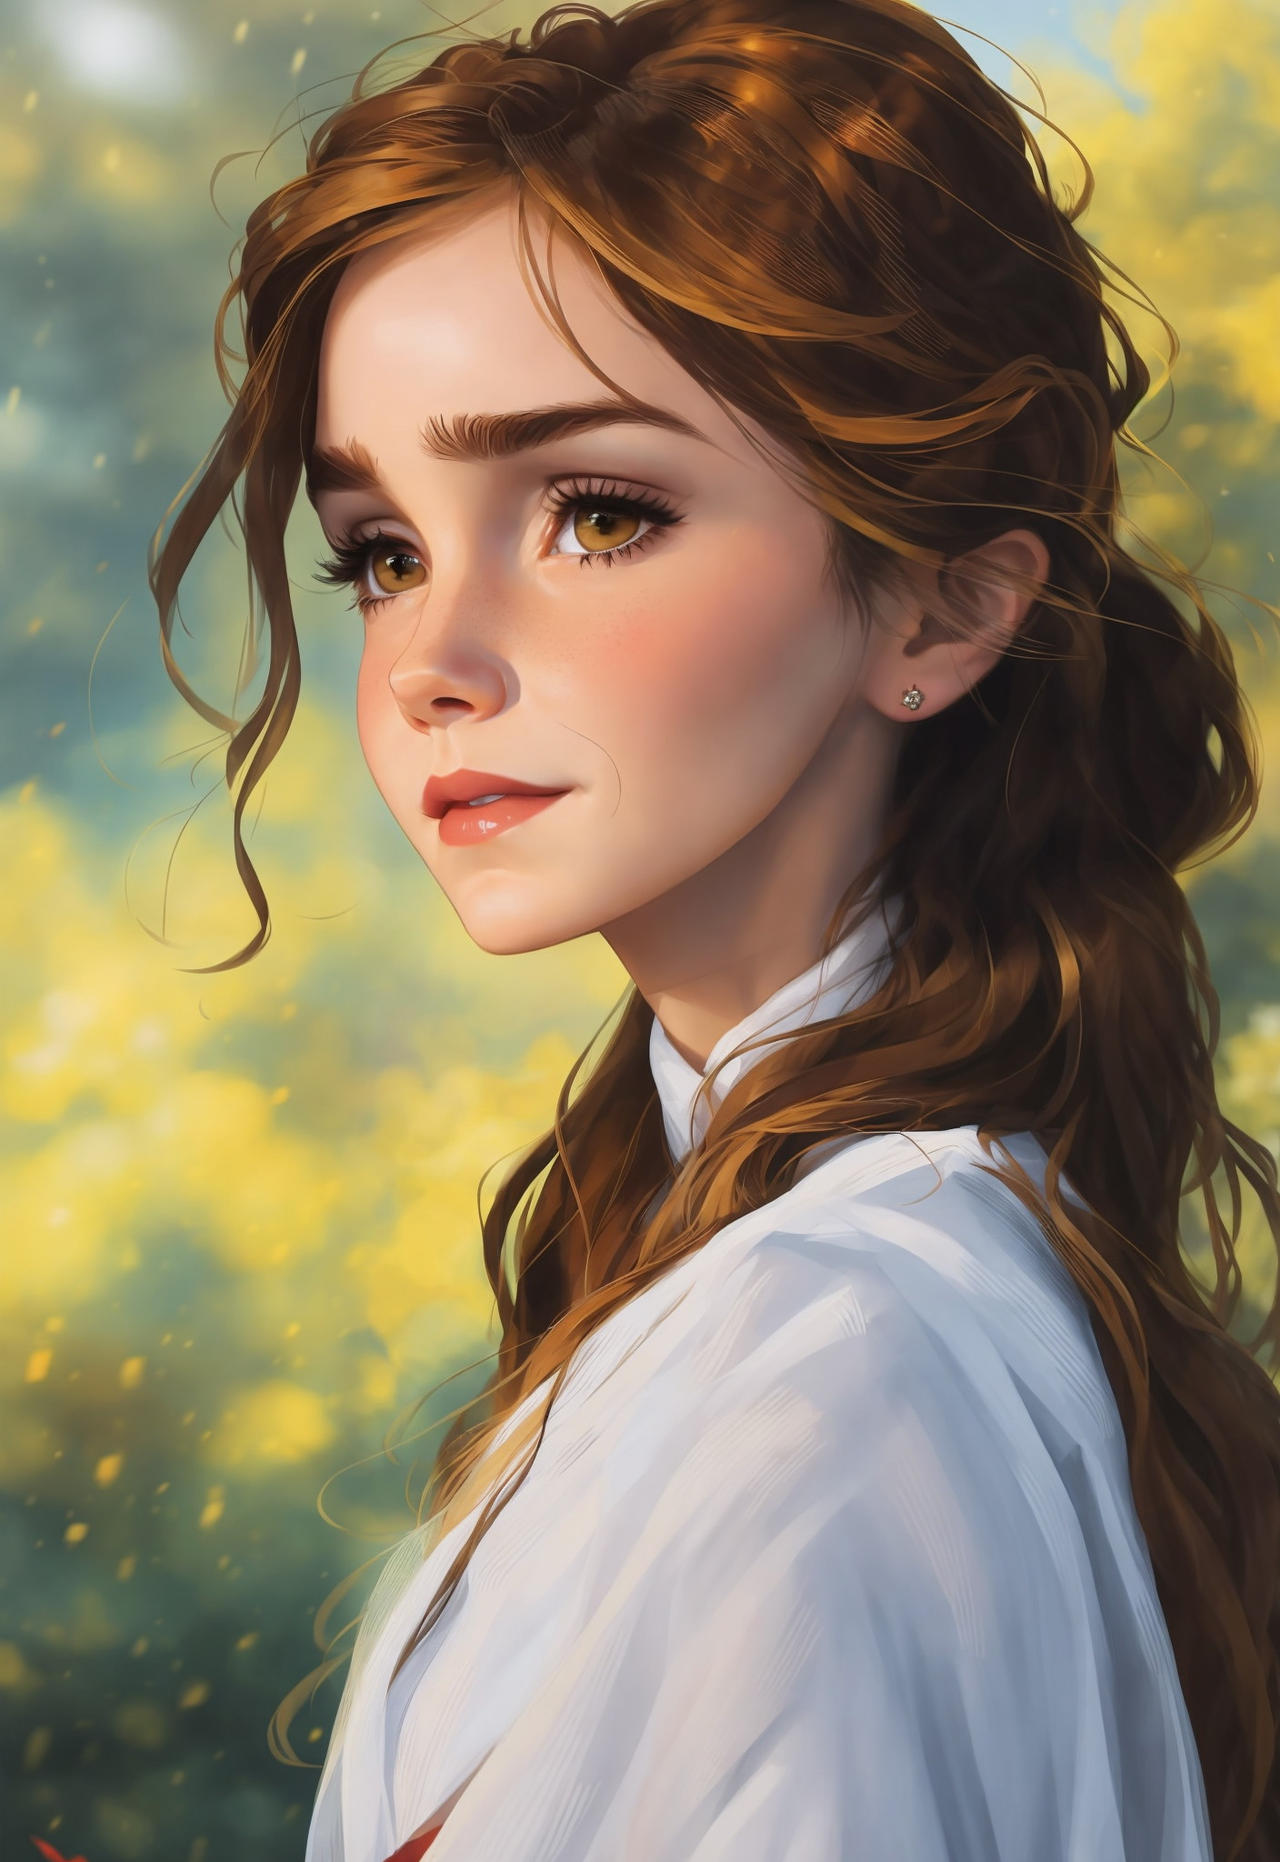 Lovely Hermione (Harry Potter series) by ArtNuova on DeviantArt